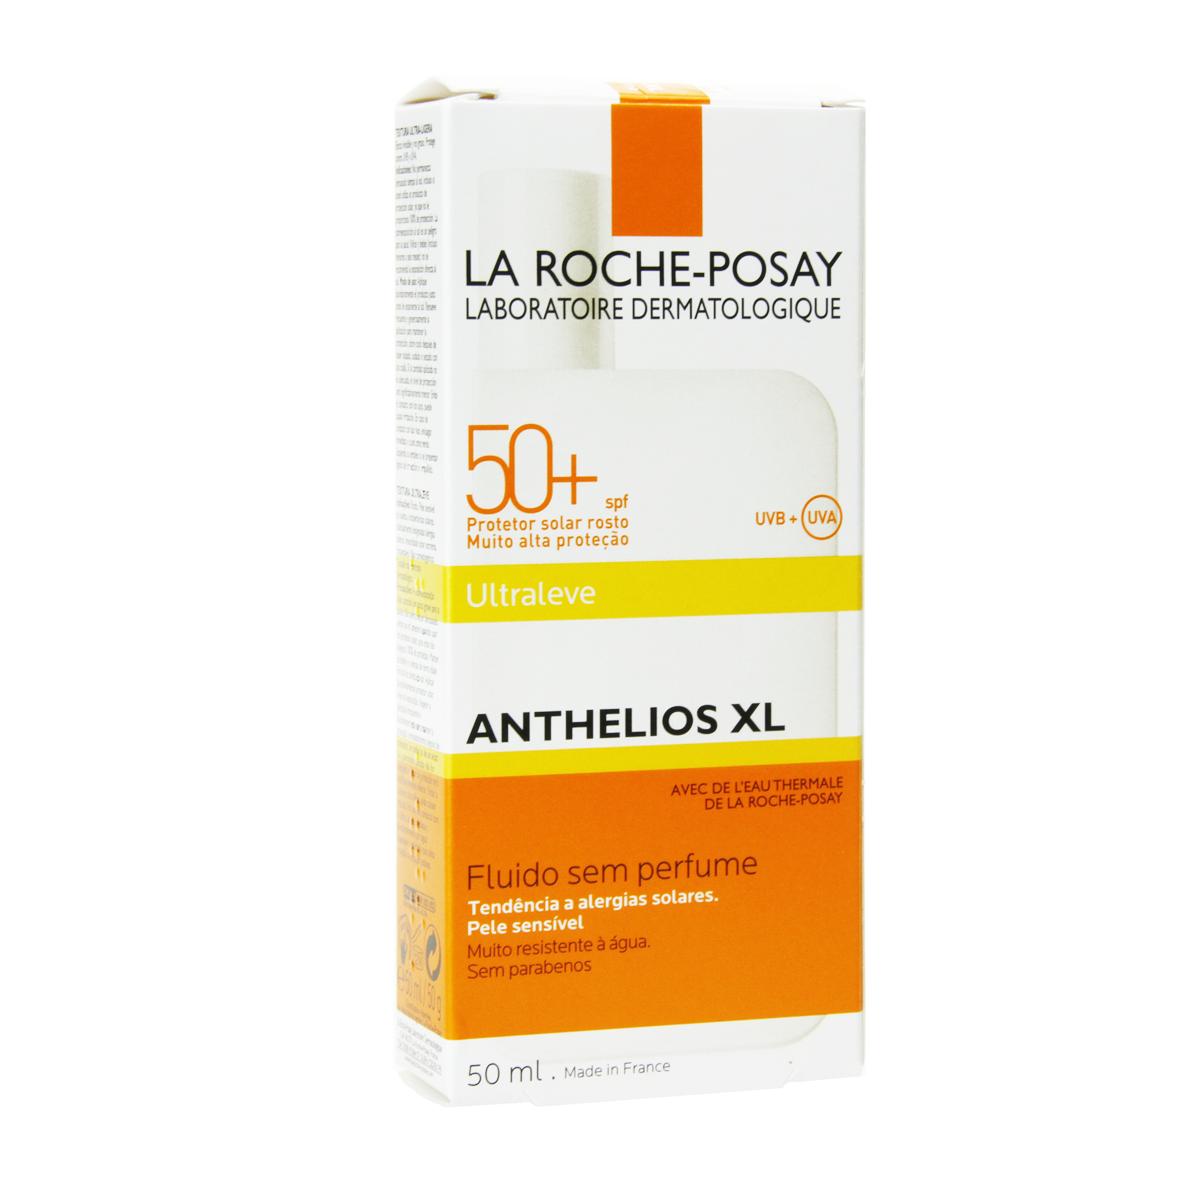 Anthelios - La roche posay anthelios xl fluido facial sin perfume spf 50+, 50ml